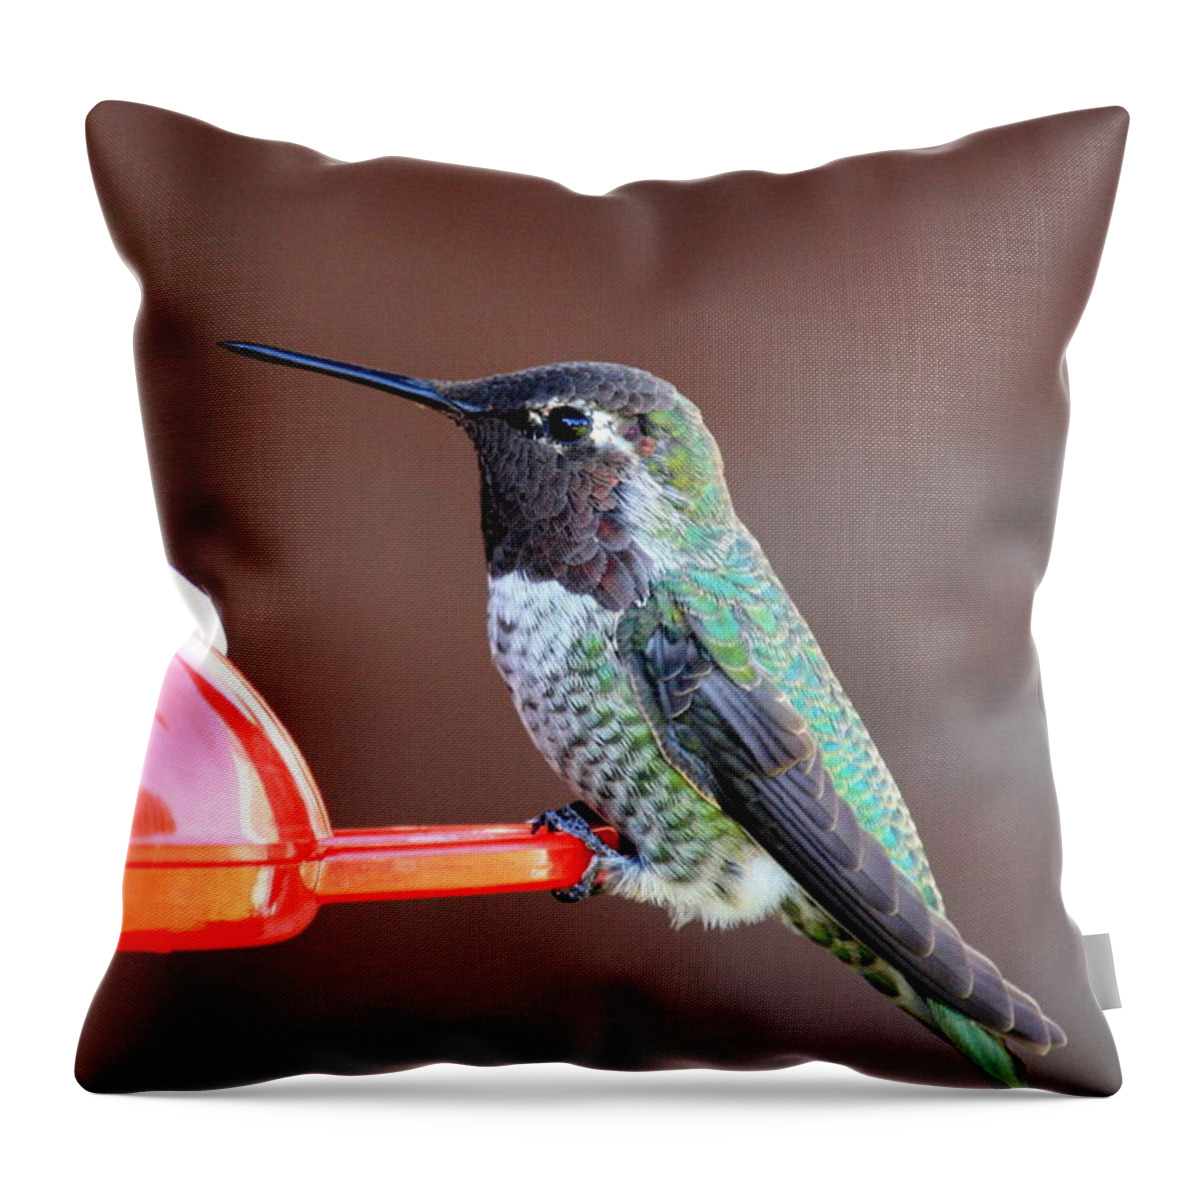 Hummingbird Throw Pillow featuring the photograph Portrait of a Hummingbird by Carol Groenen